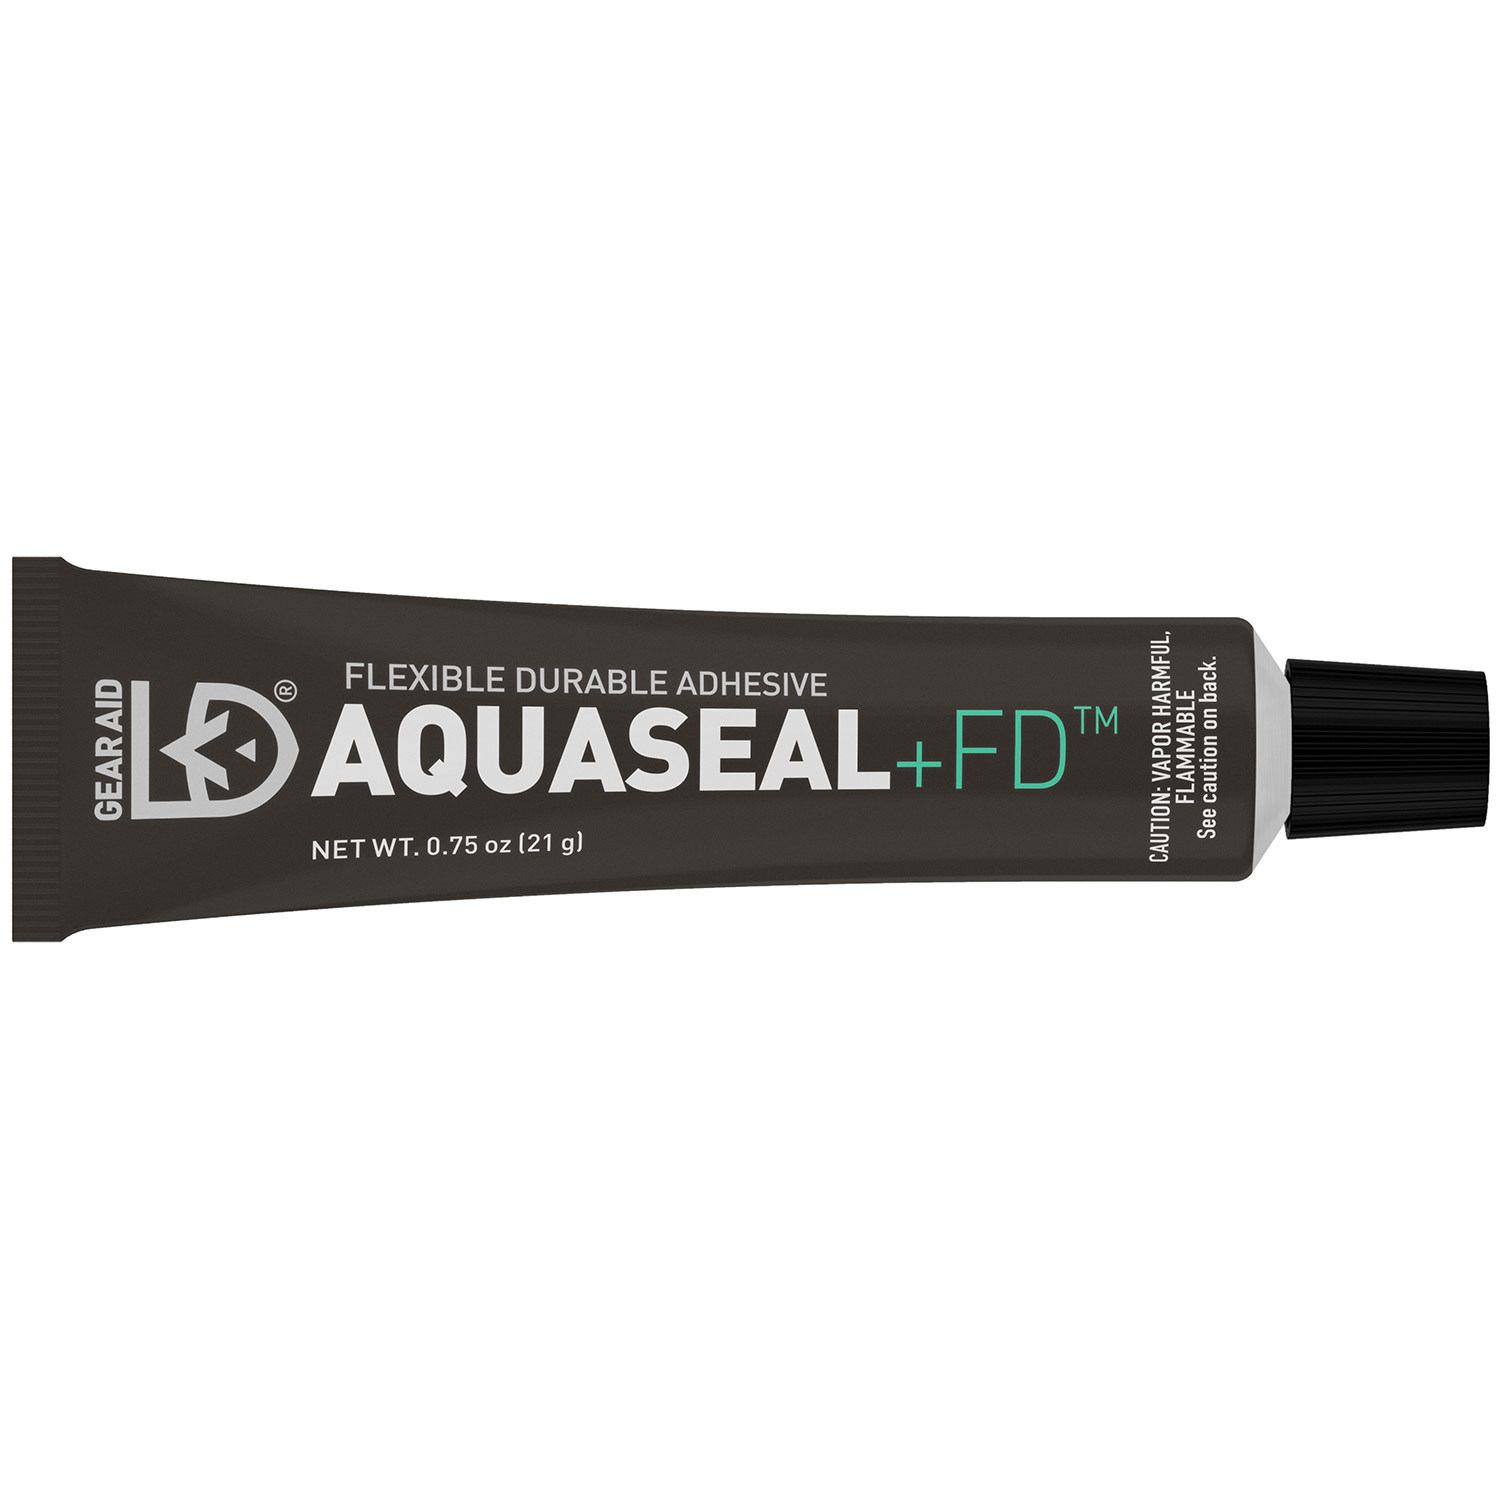 Men's Aquaseal 4oz Black Leather Waterproofing & Conditioner